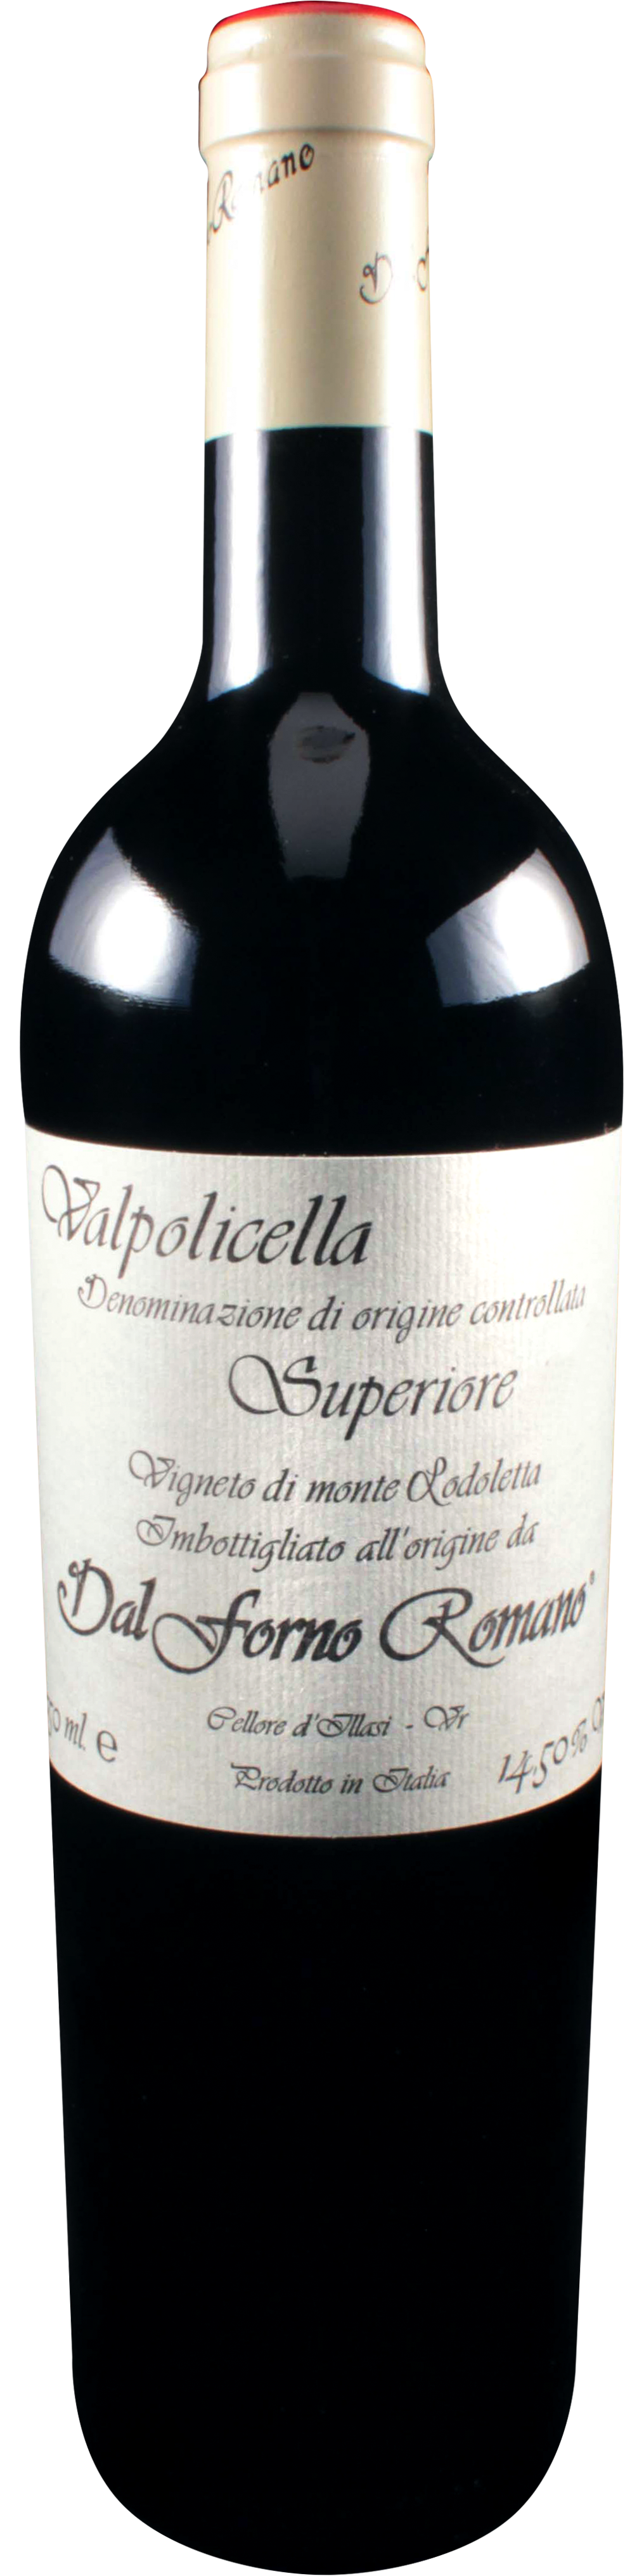 Bottle shot of 2008 Valpolicella Superiore